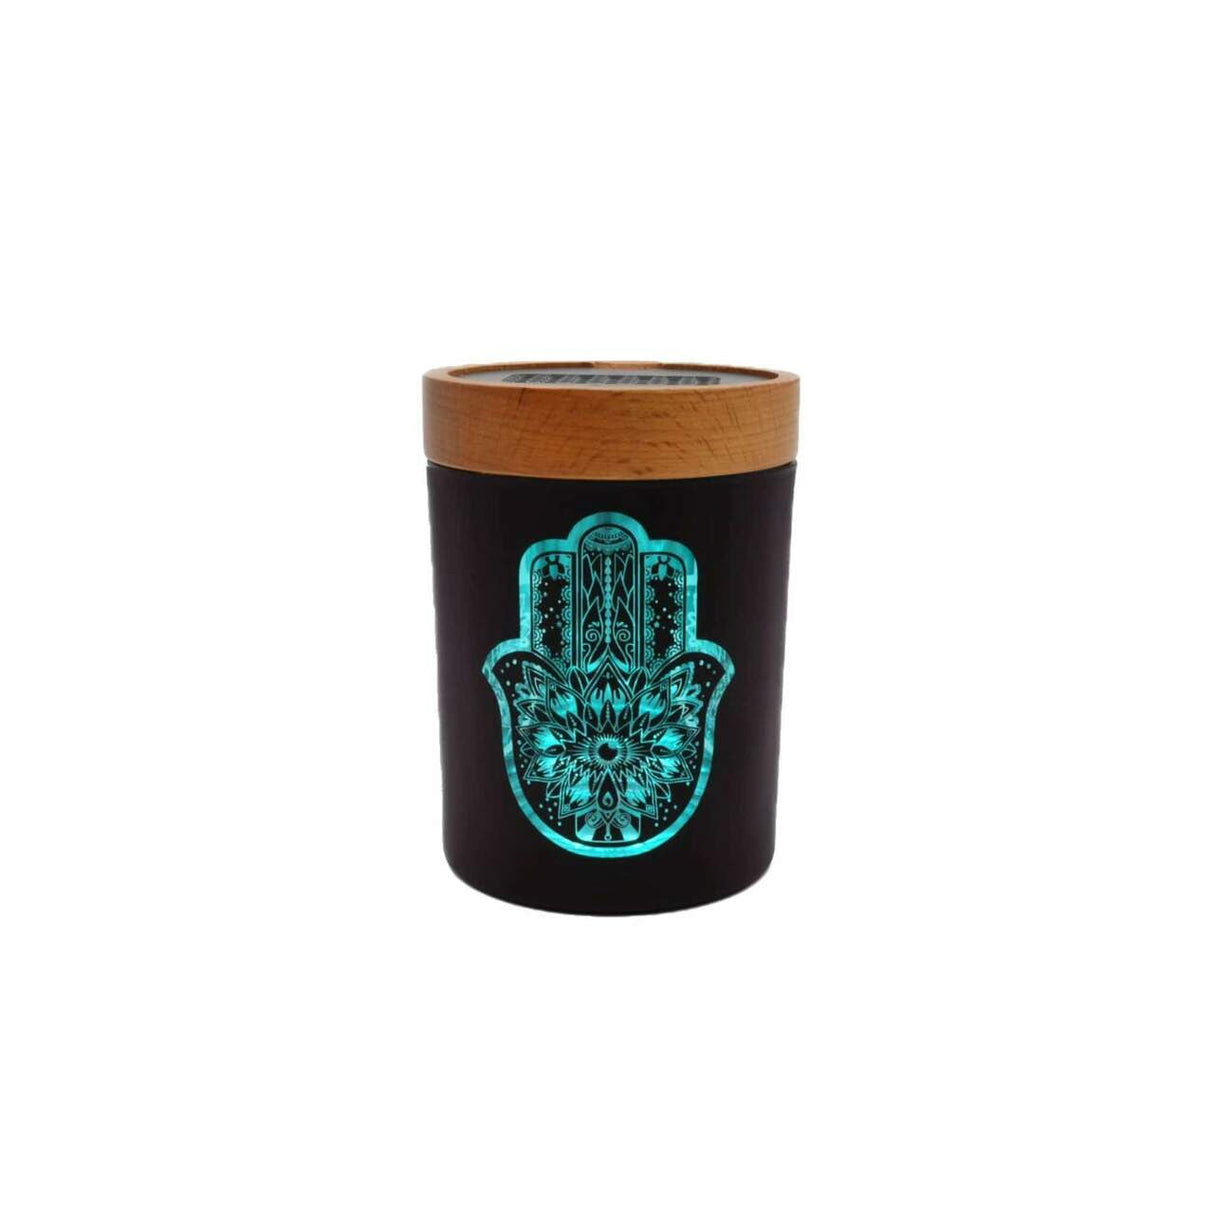 V Syndicate Smart Stash Jar Medium with Hamsa Turquoise design, portable wooden herb storage